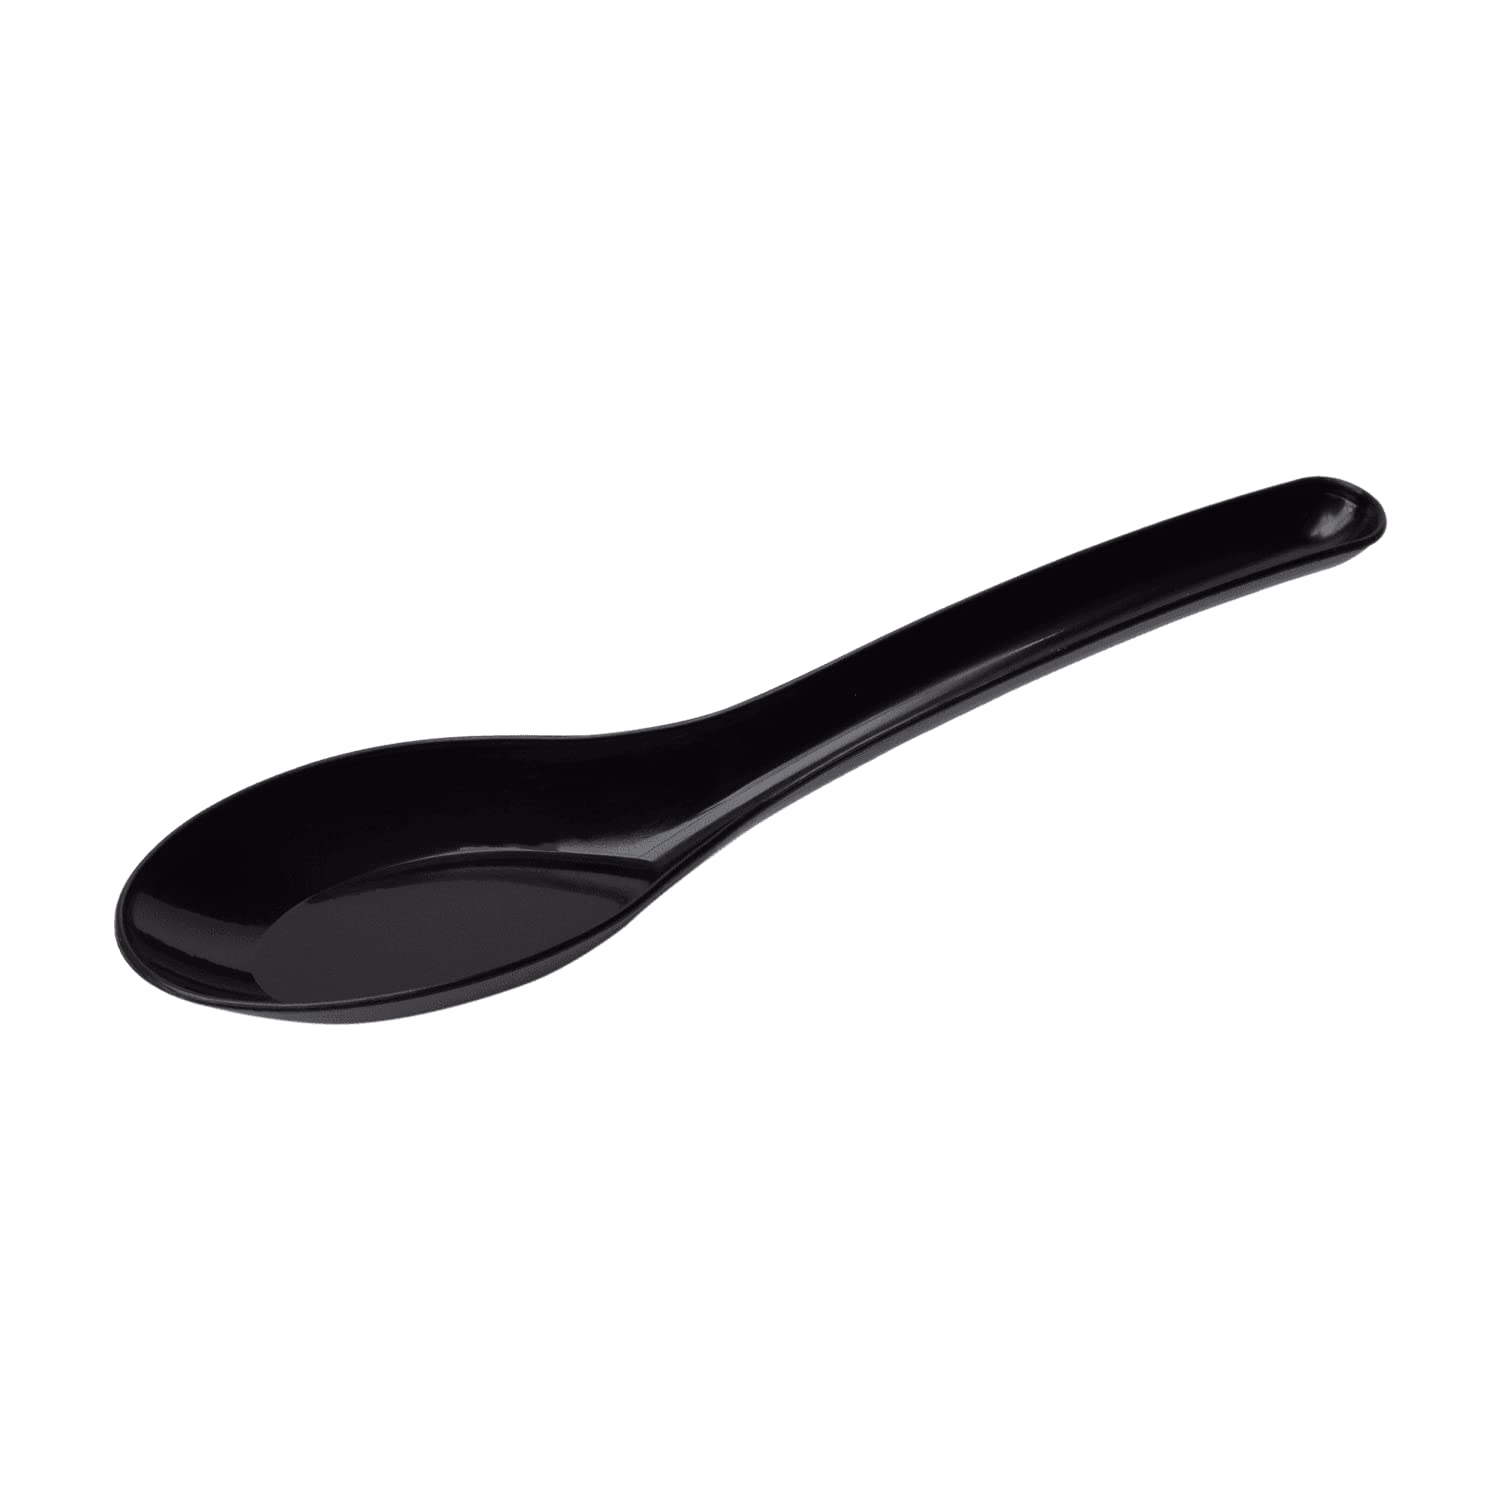 Karat U2015B Med-Heavy Weight Asian Soup Spoon - Black -1,000 ct